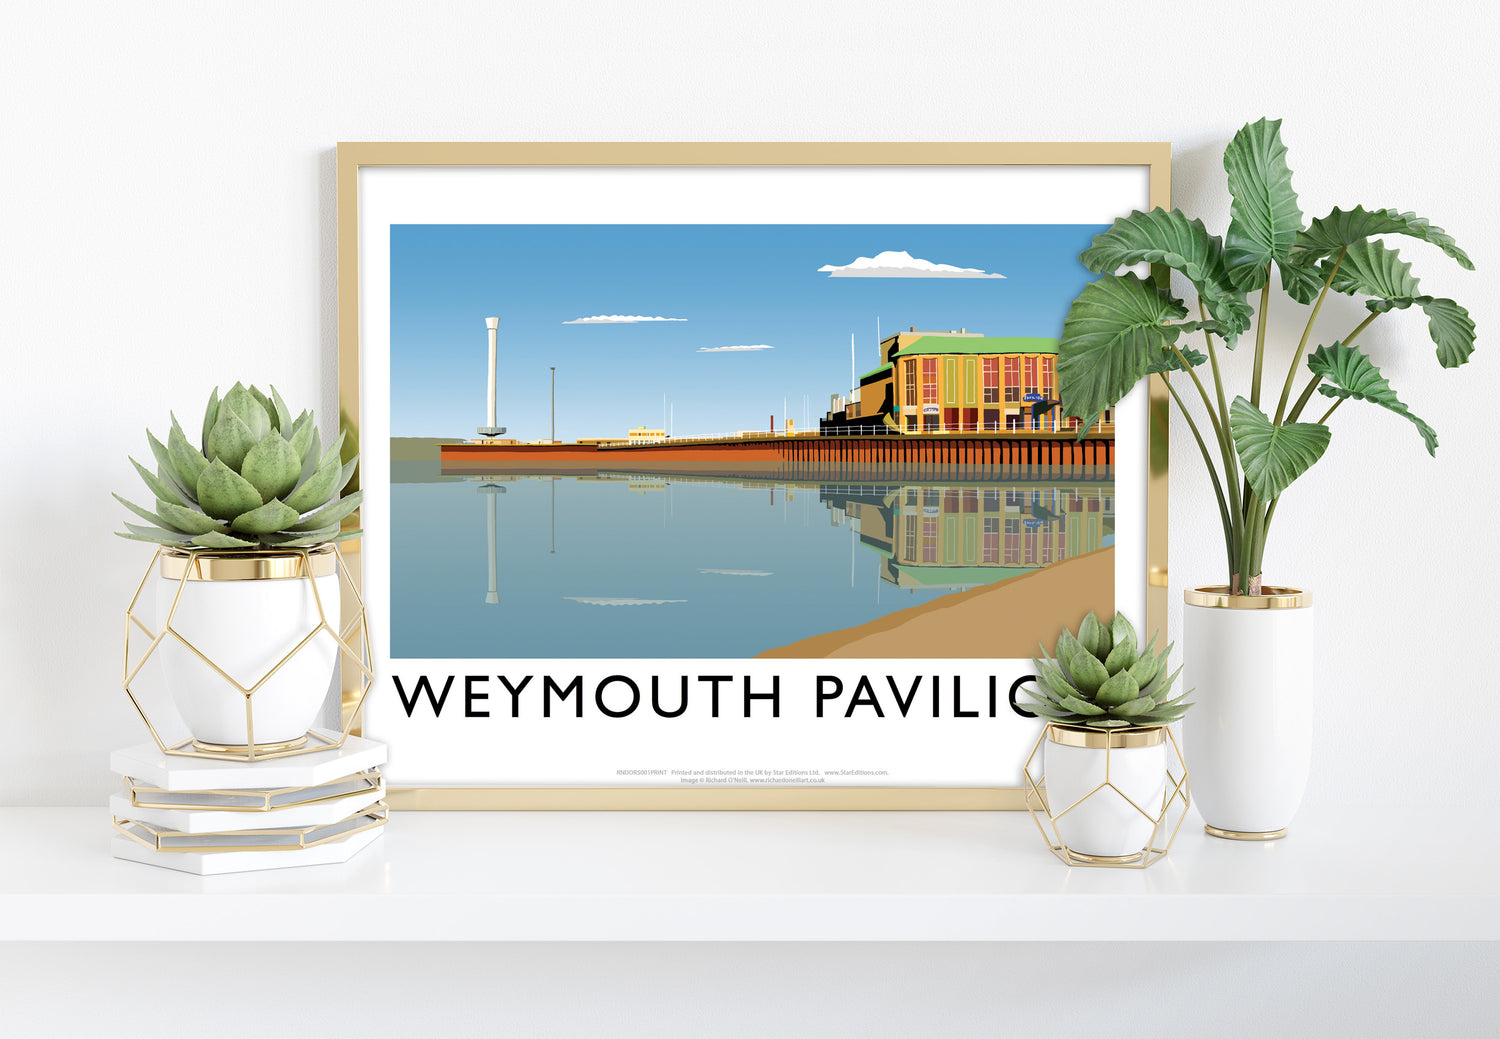 Weymouth Pavilion, Dorset - Art Print